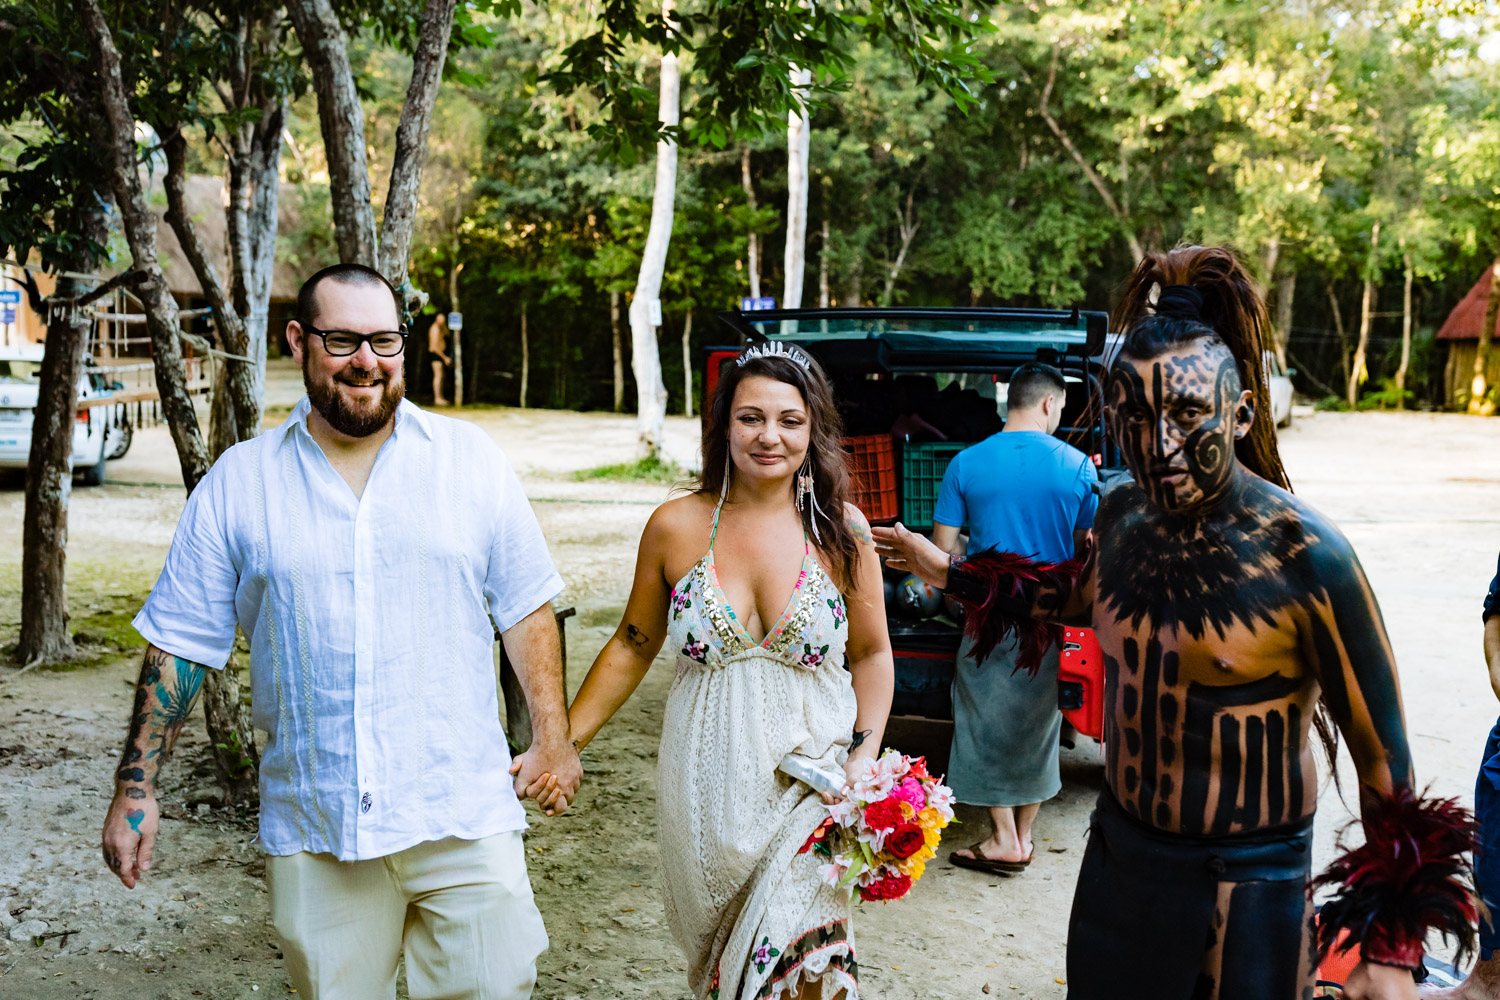 Mayan Warrior leading to the wedding